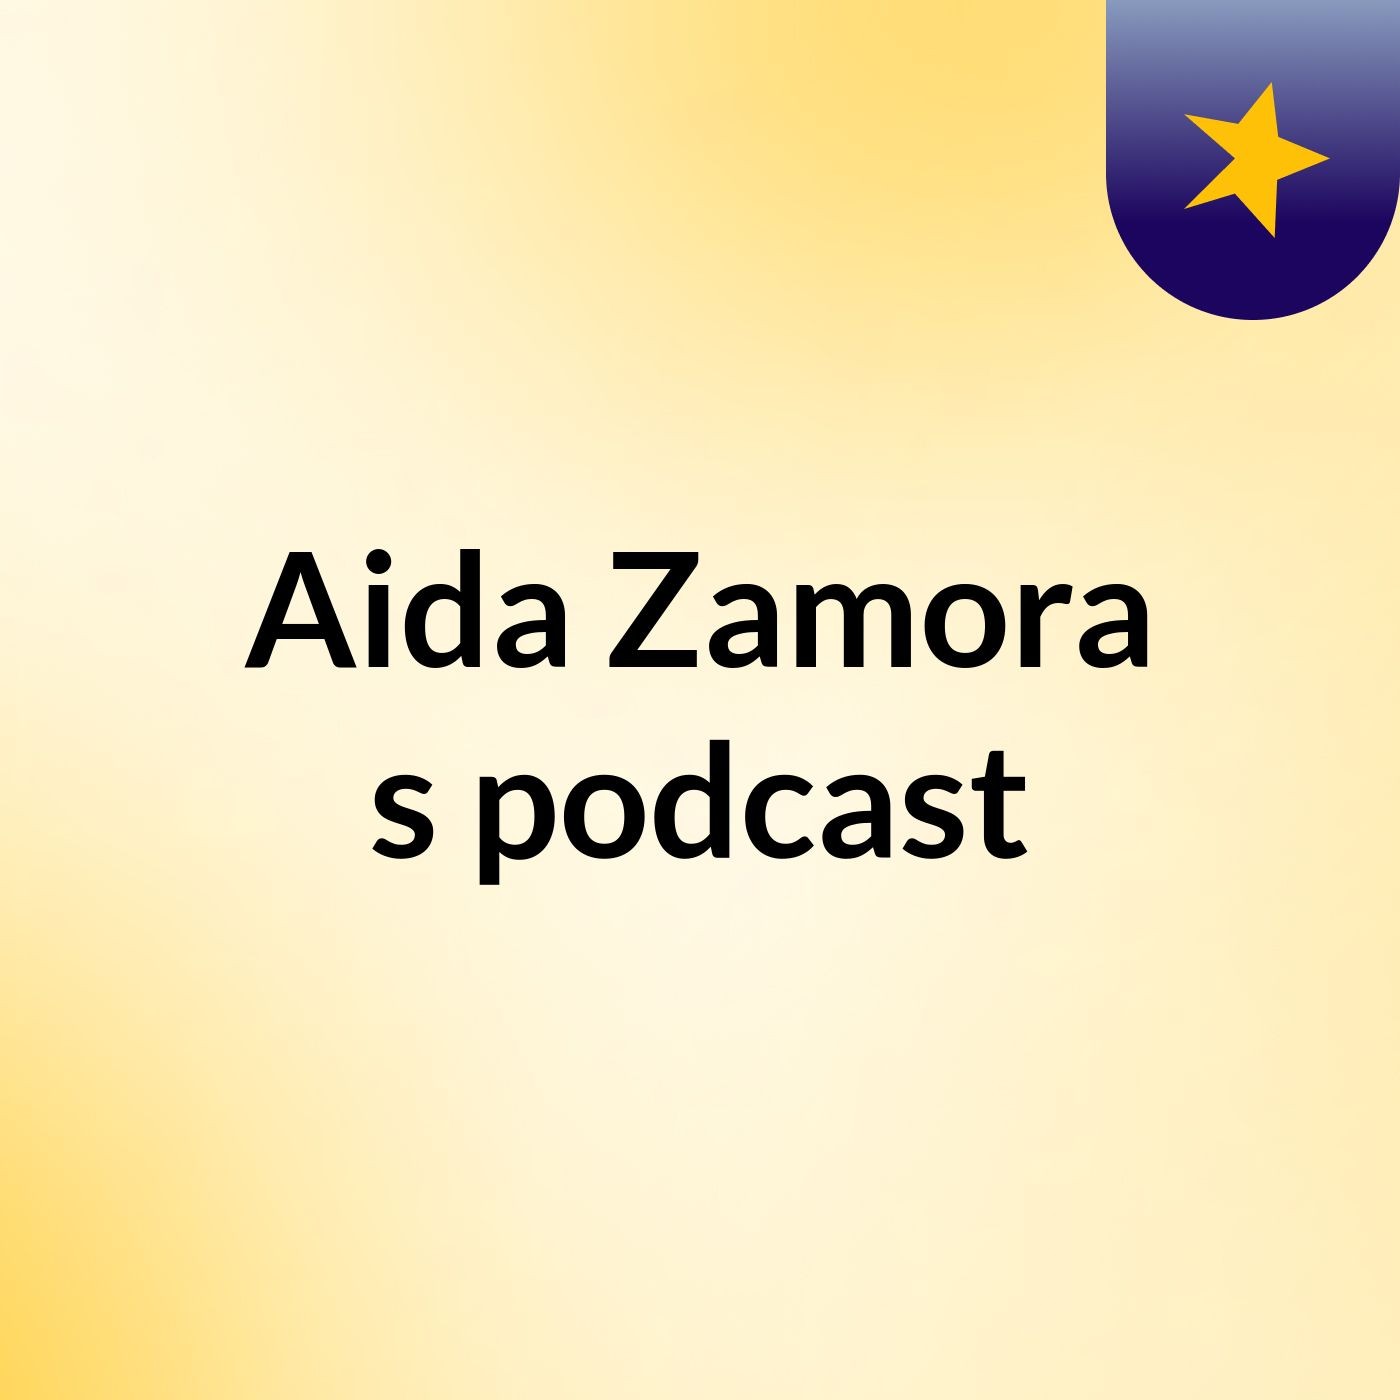 Aida Zamora's podcast